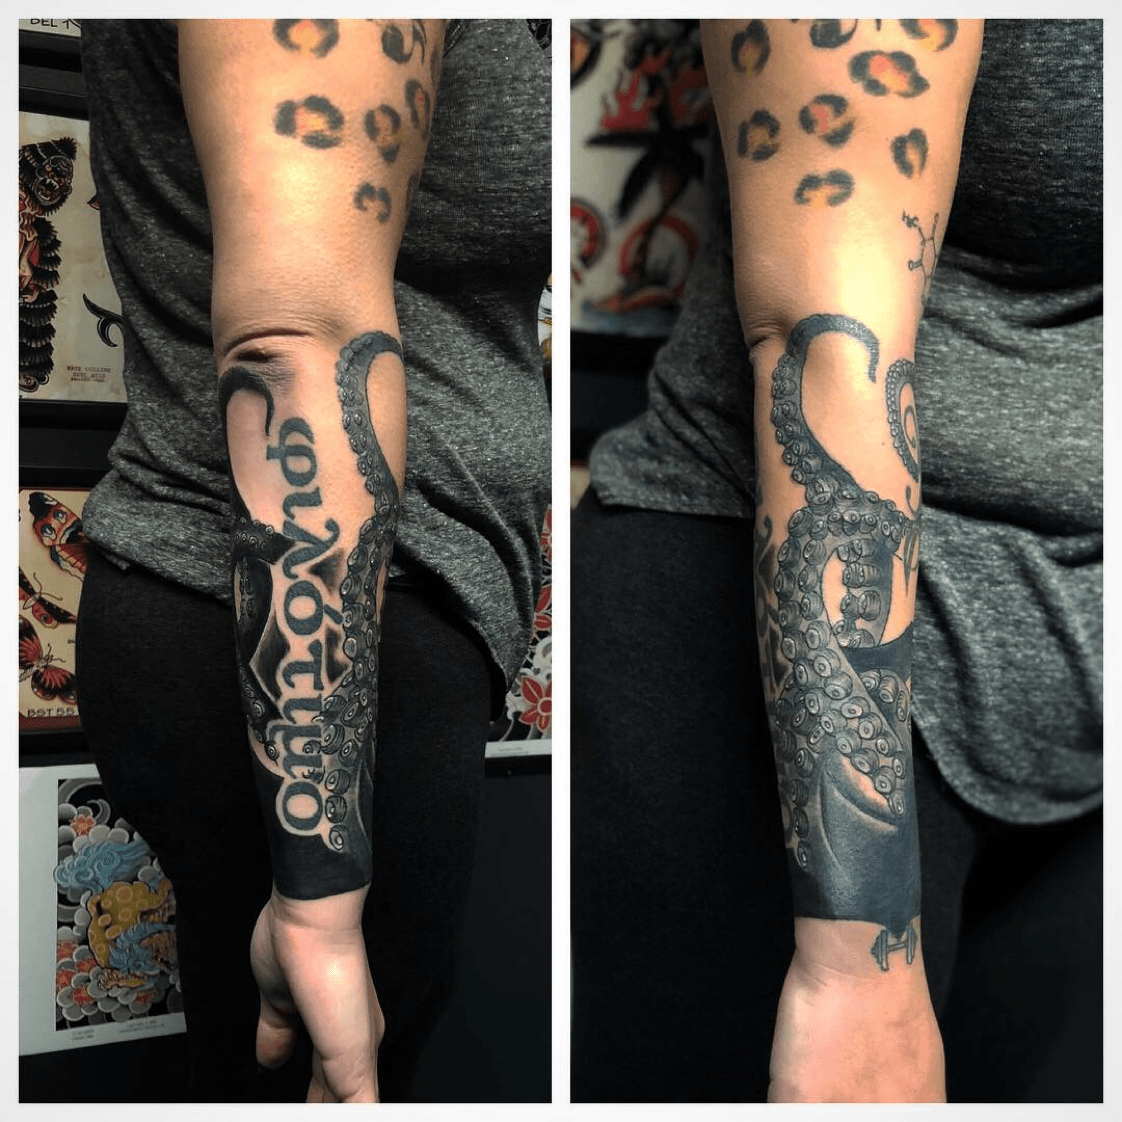 My Kraken Tattoo by Zach at Legacy Art and Tattoo Edgewood MD  rtattoos